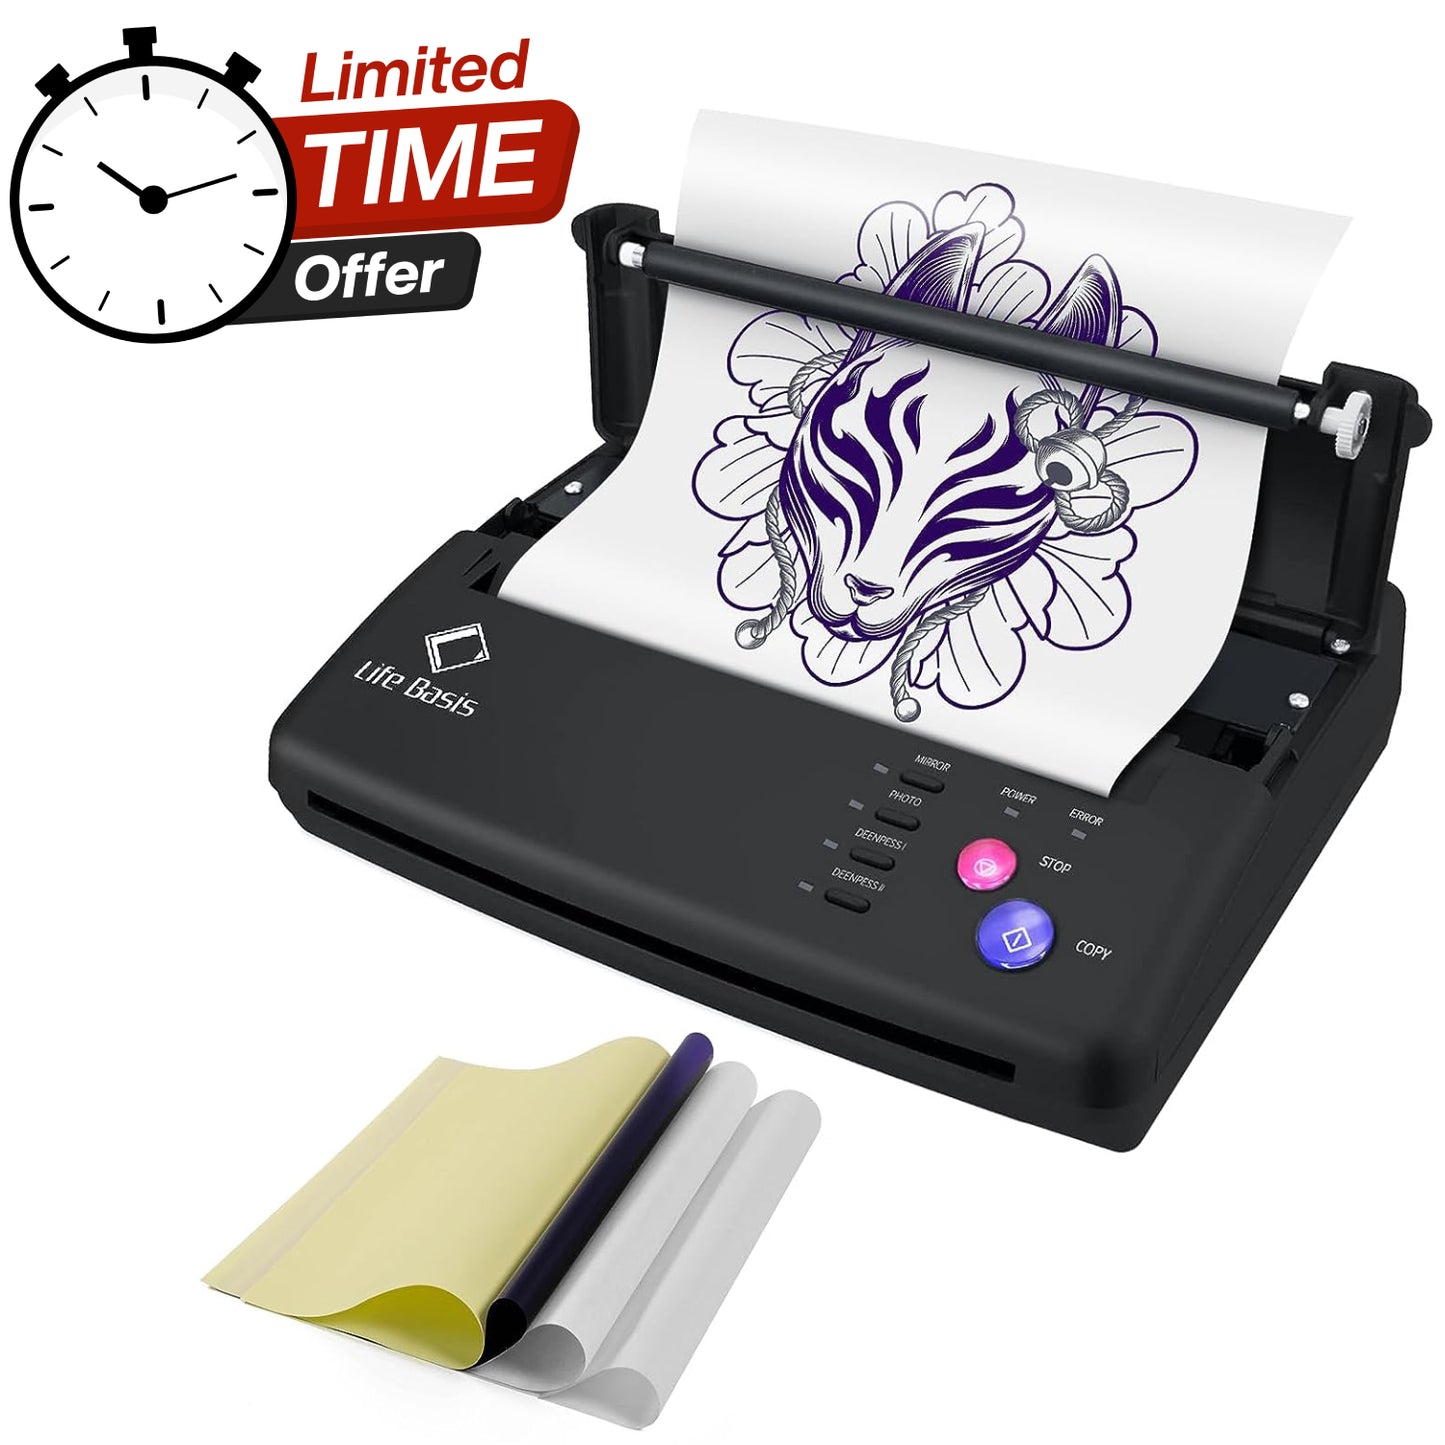 ad  - Tattoo Thermal Stencil Maker Tattoo Transfer Copier Printer For  A4 Paper Maker